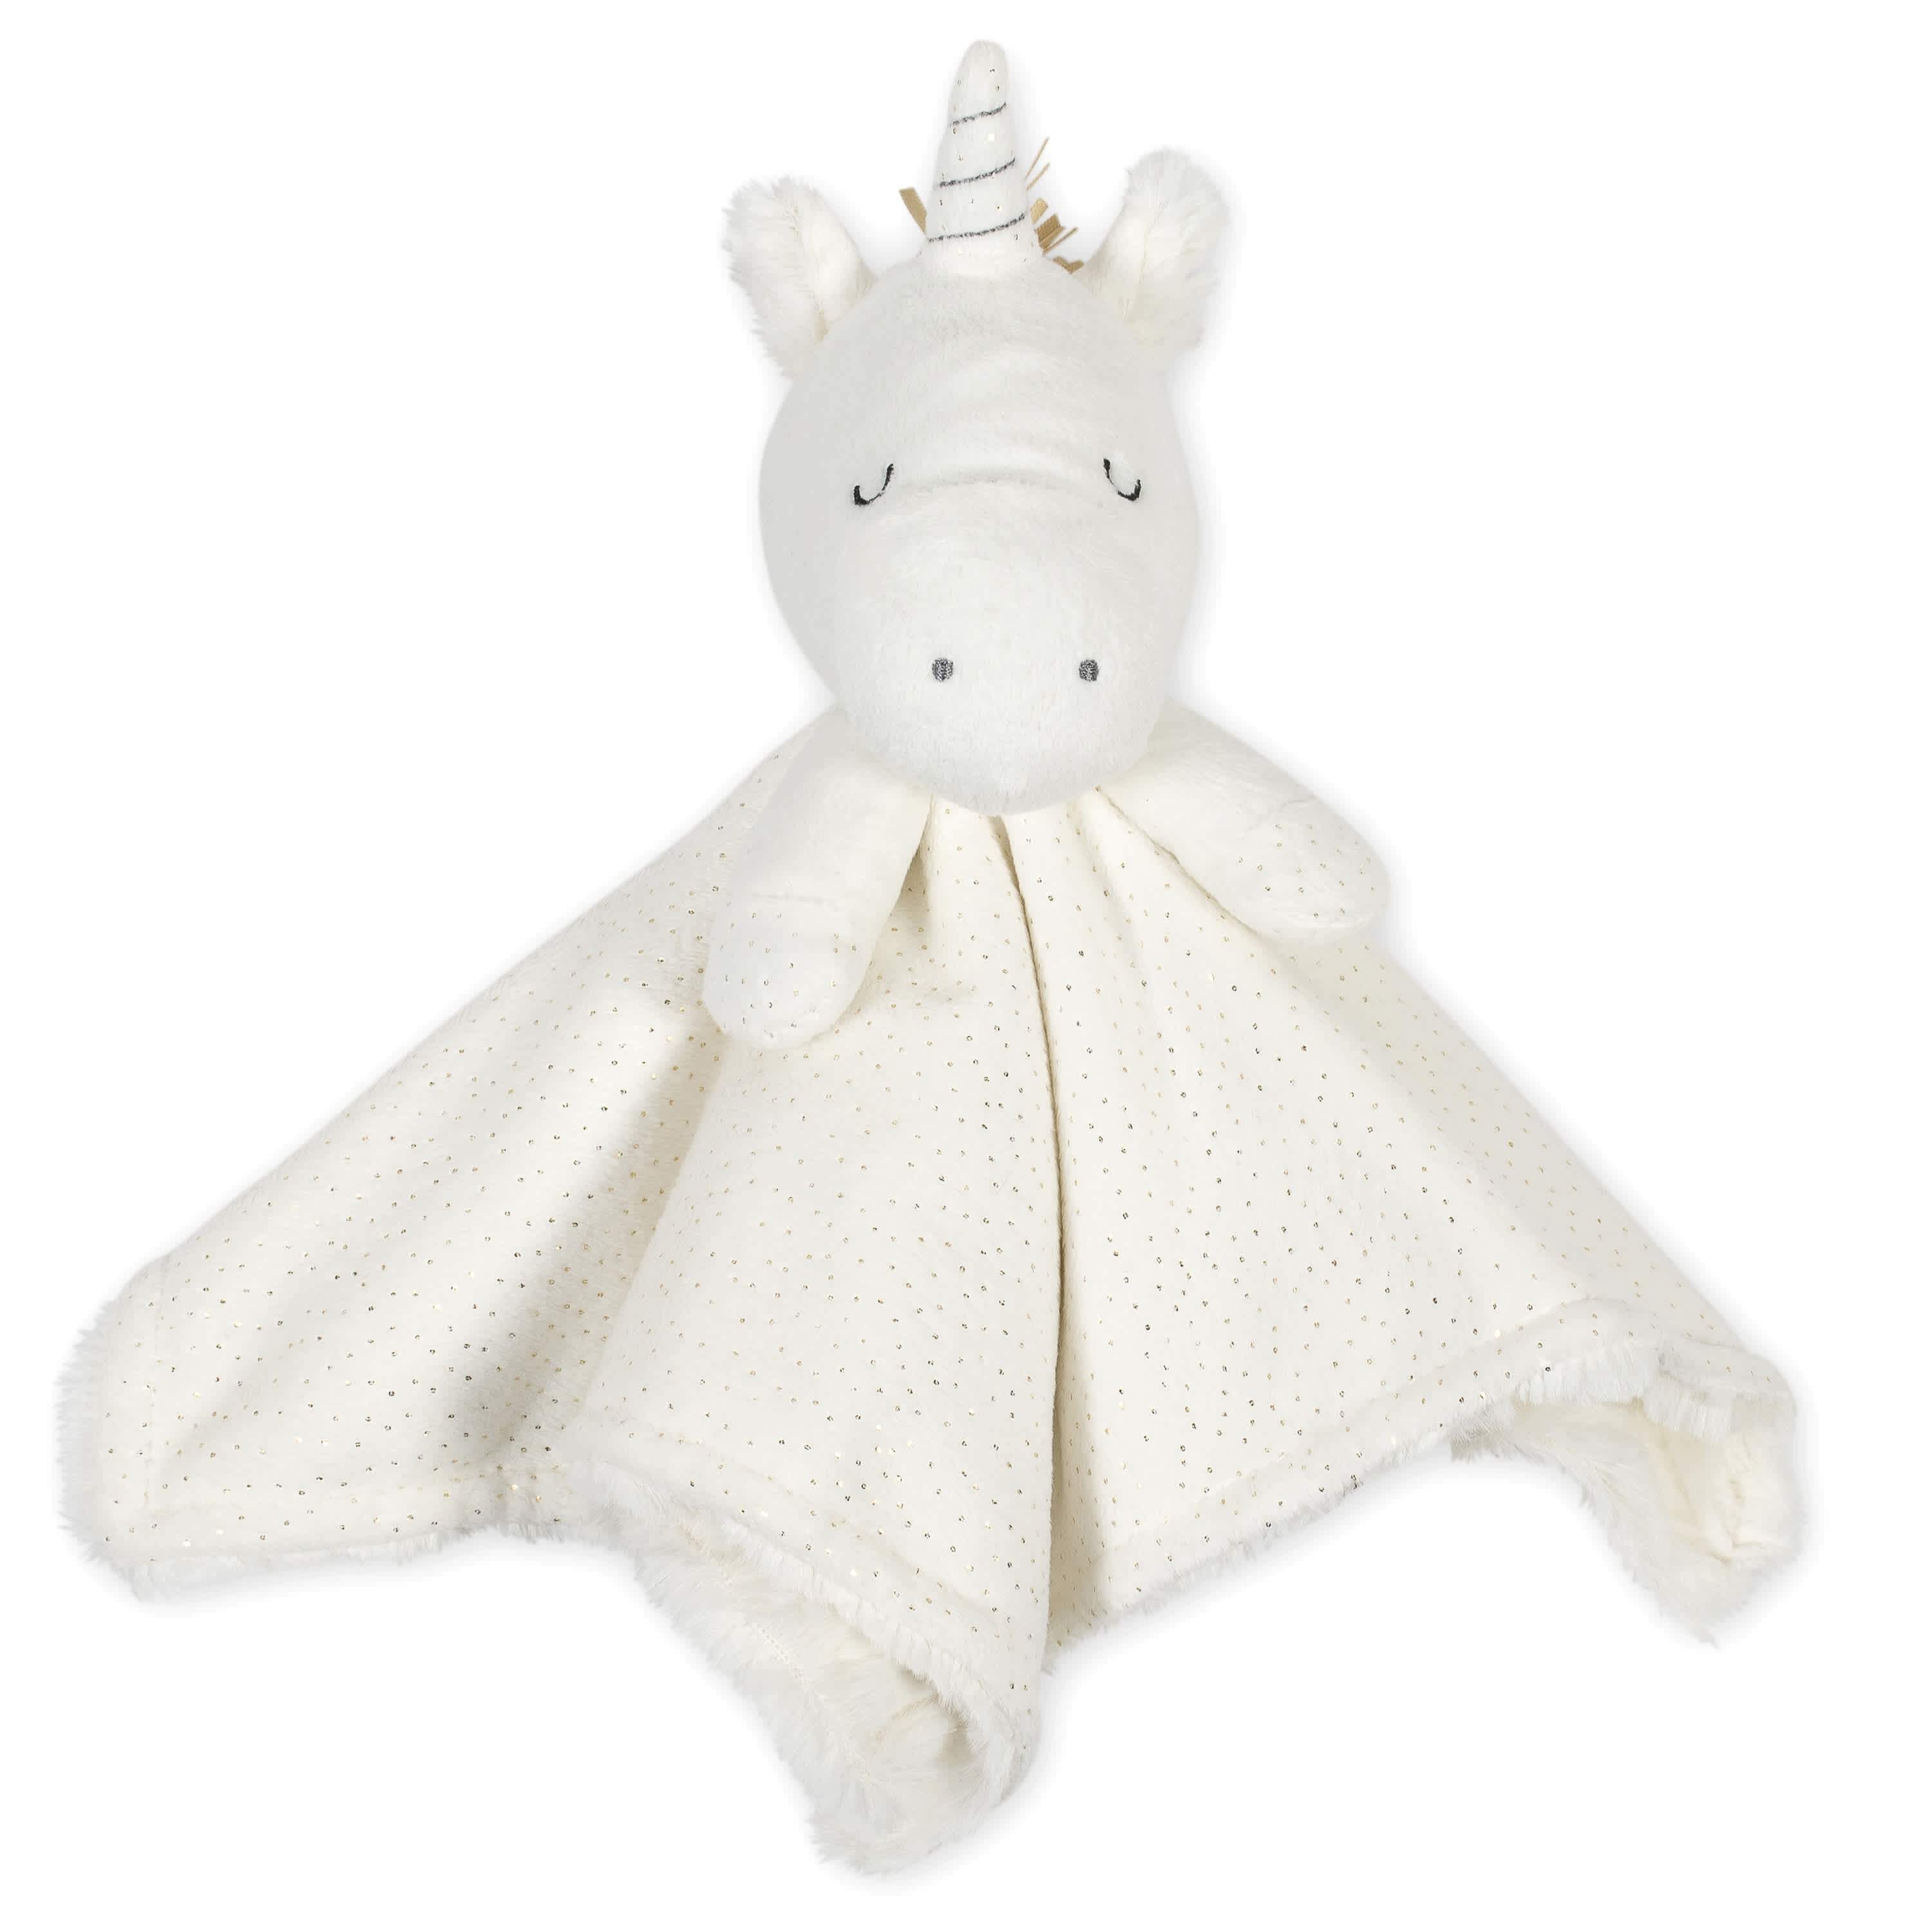 Unicorn Soft Toy and Unicorn Comfort Blanket New Baby Gift Set